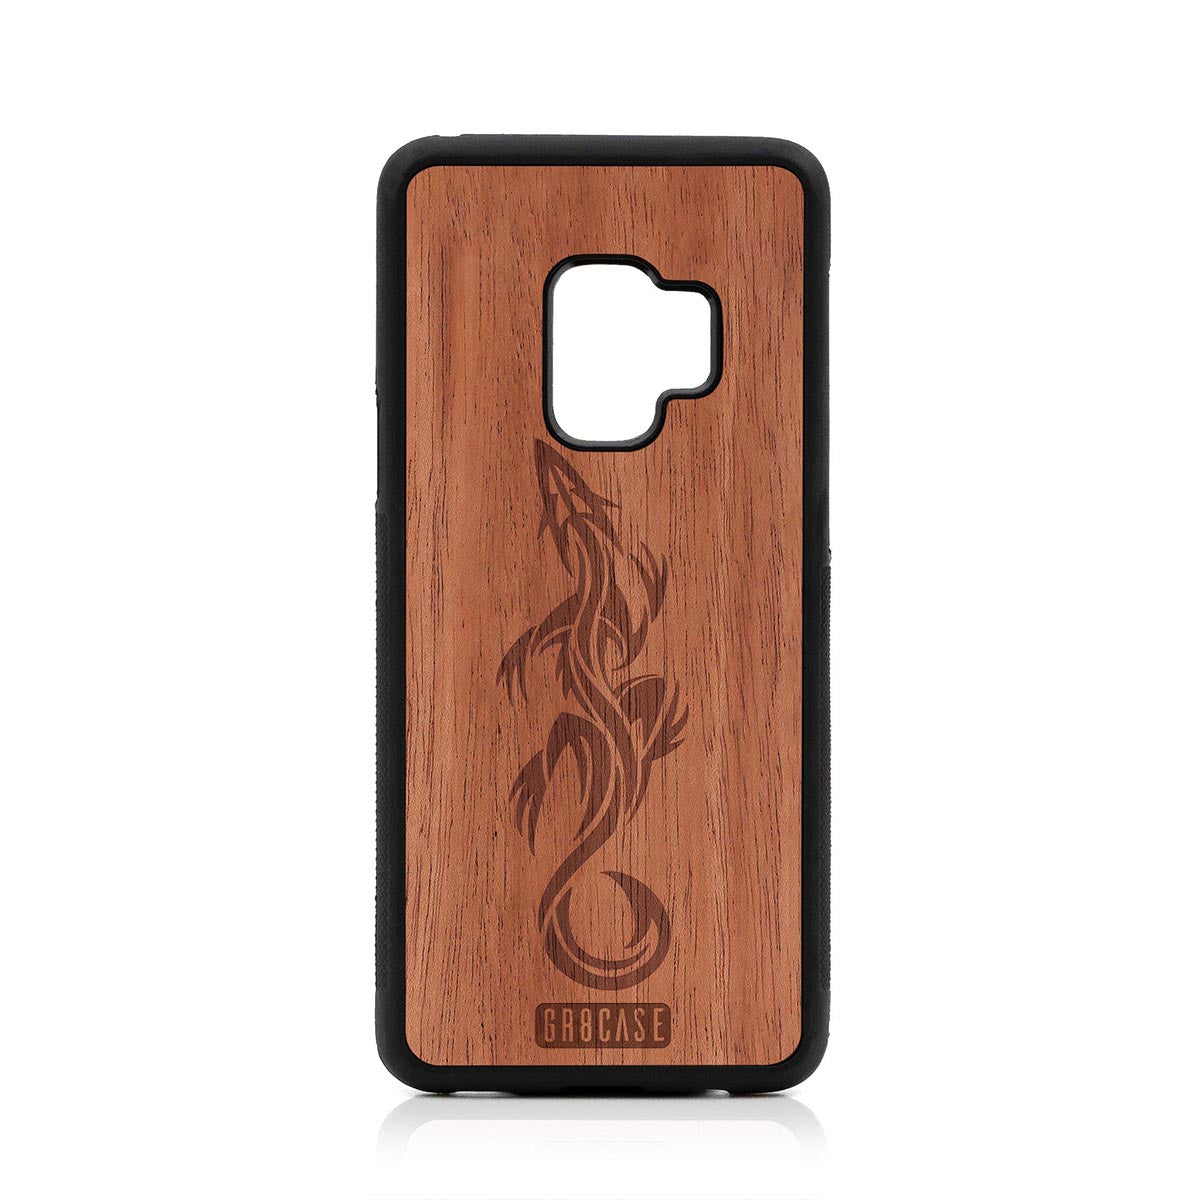 Lizard Design Wood Case Samsung Galaxy S9 by GR8CASE